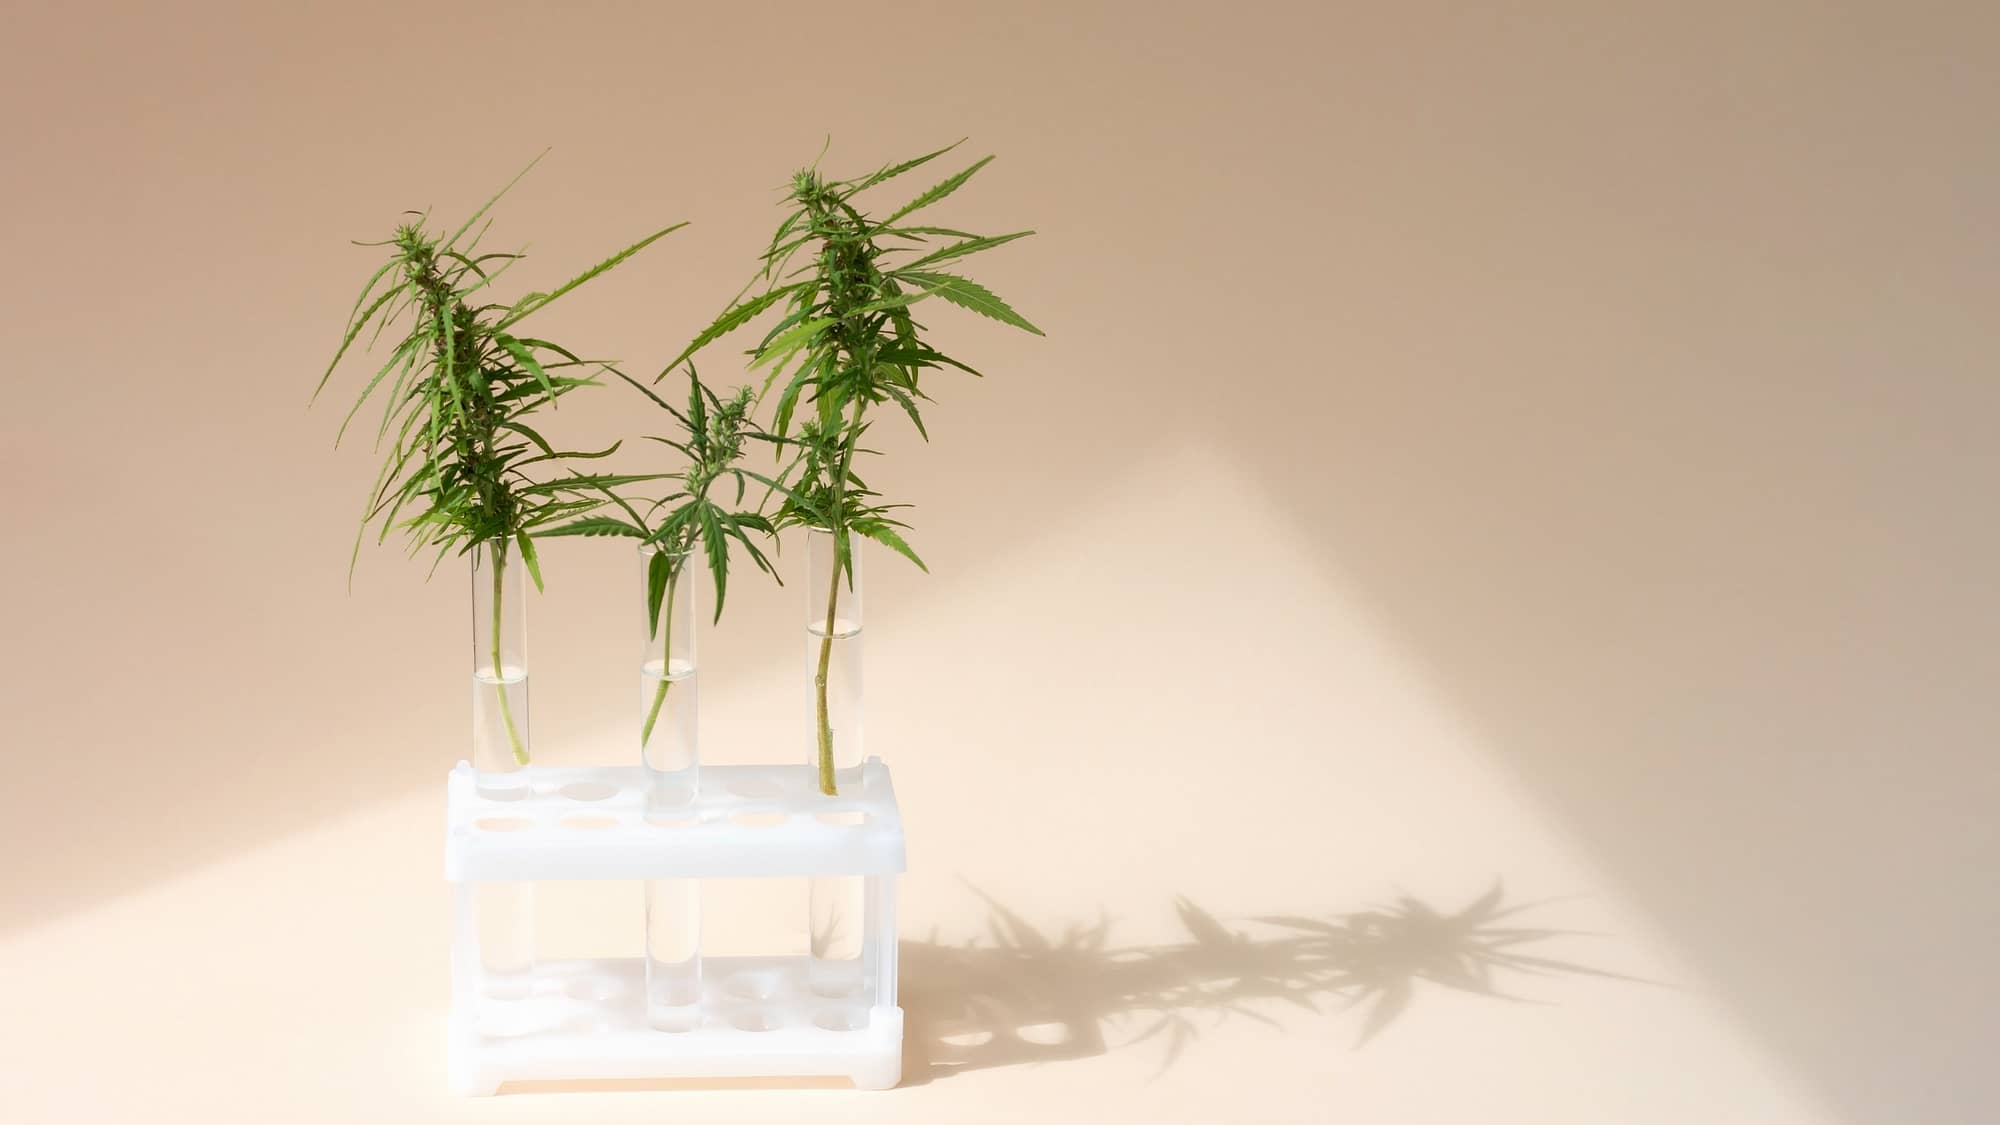 How drug testing for marijuana works